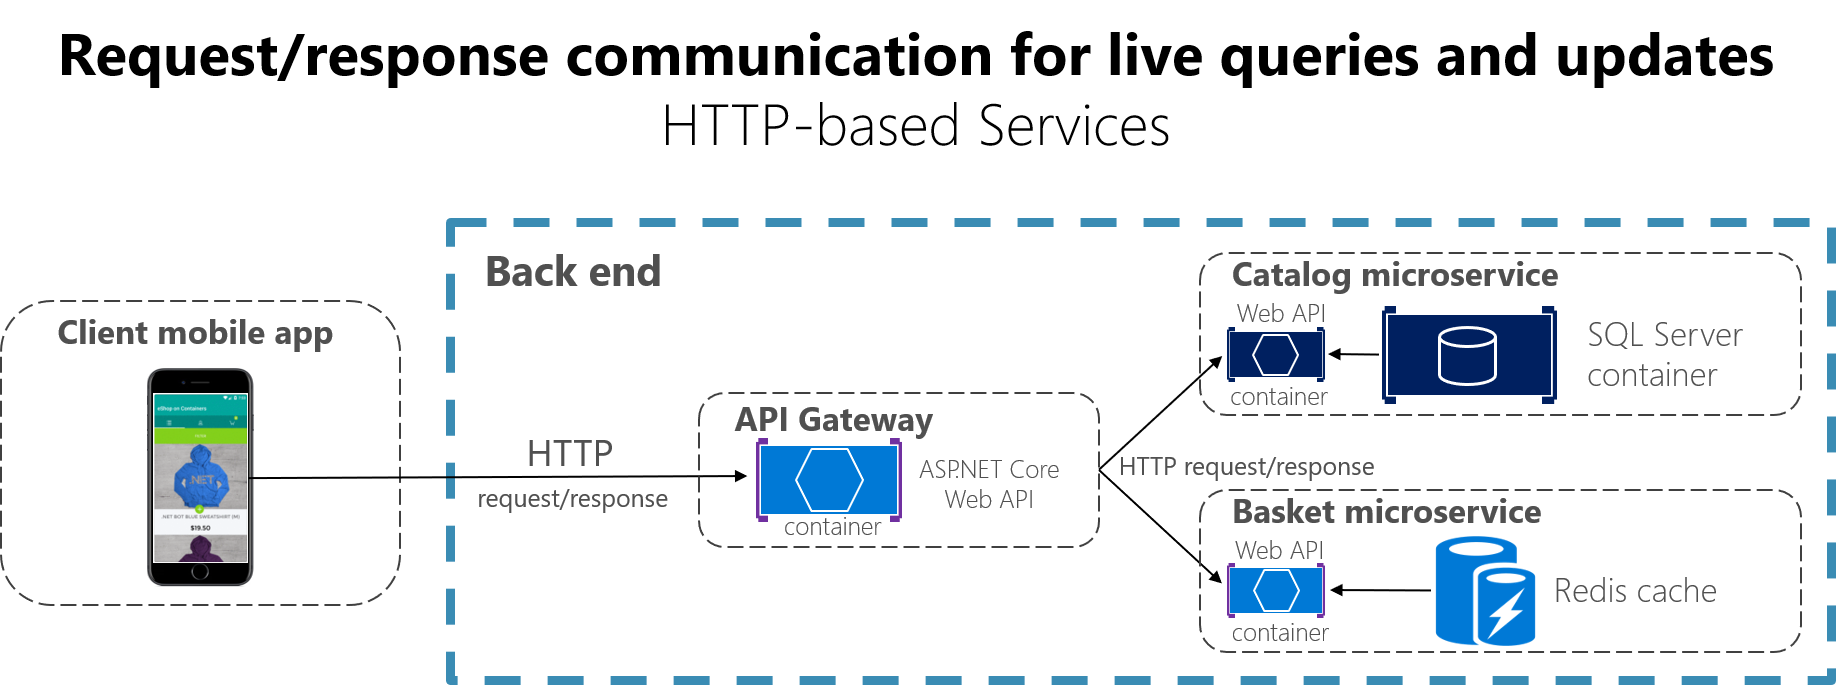 Размещение asp.net core в службе windows